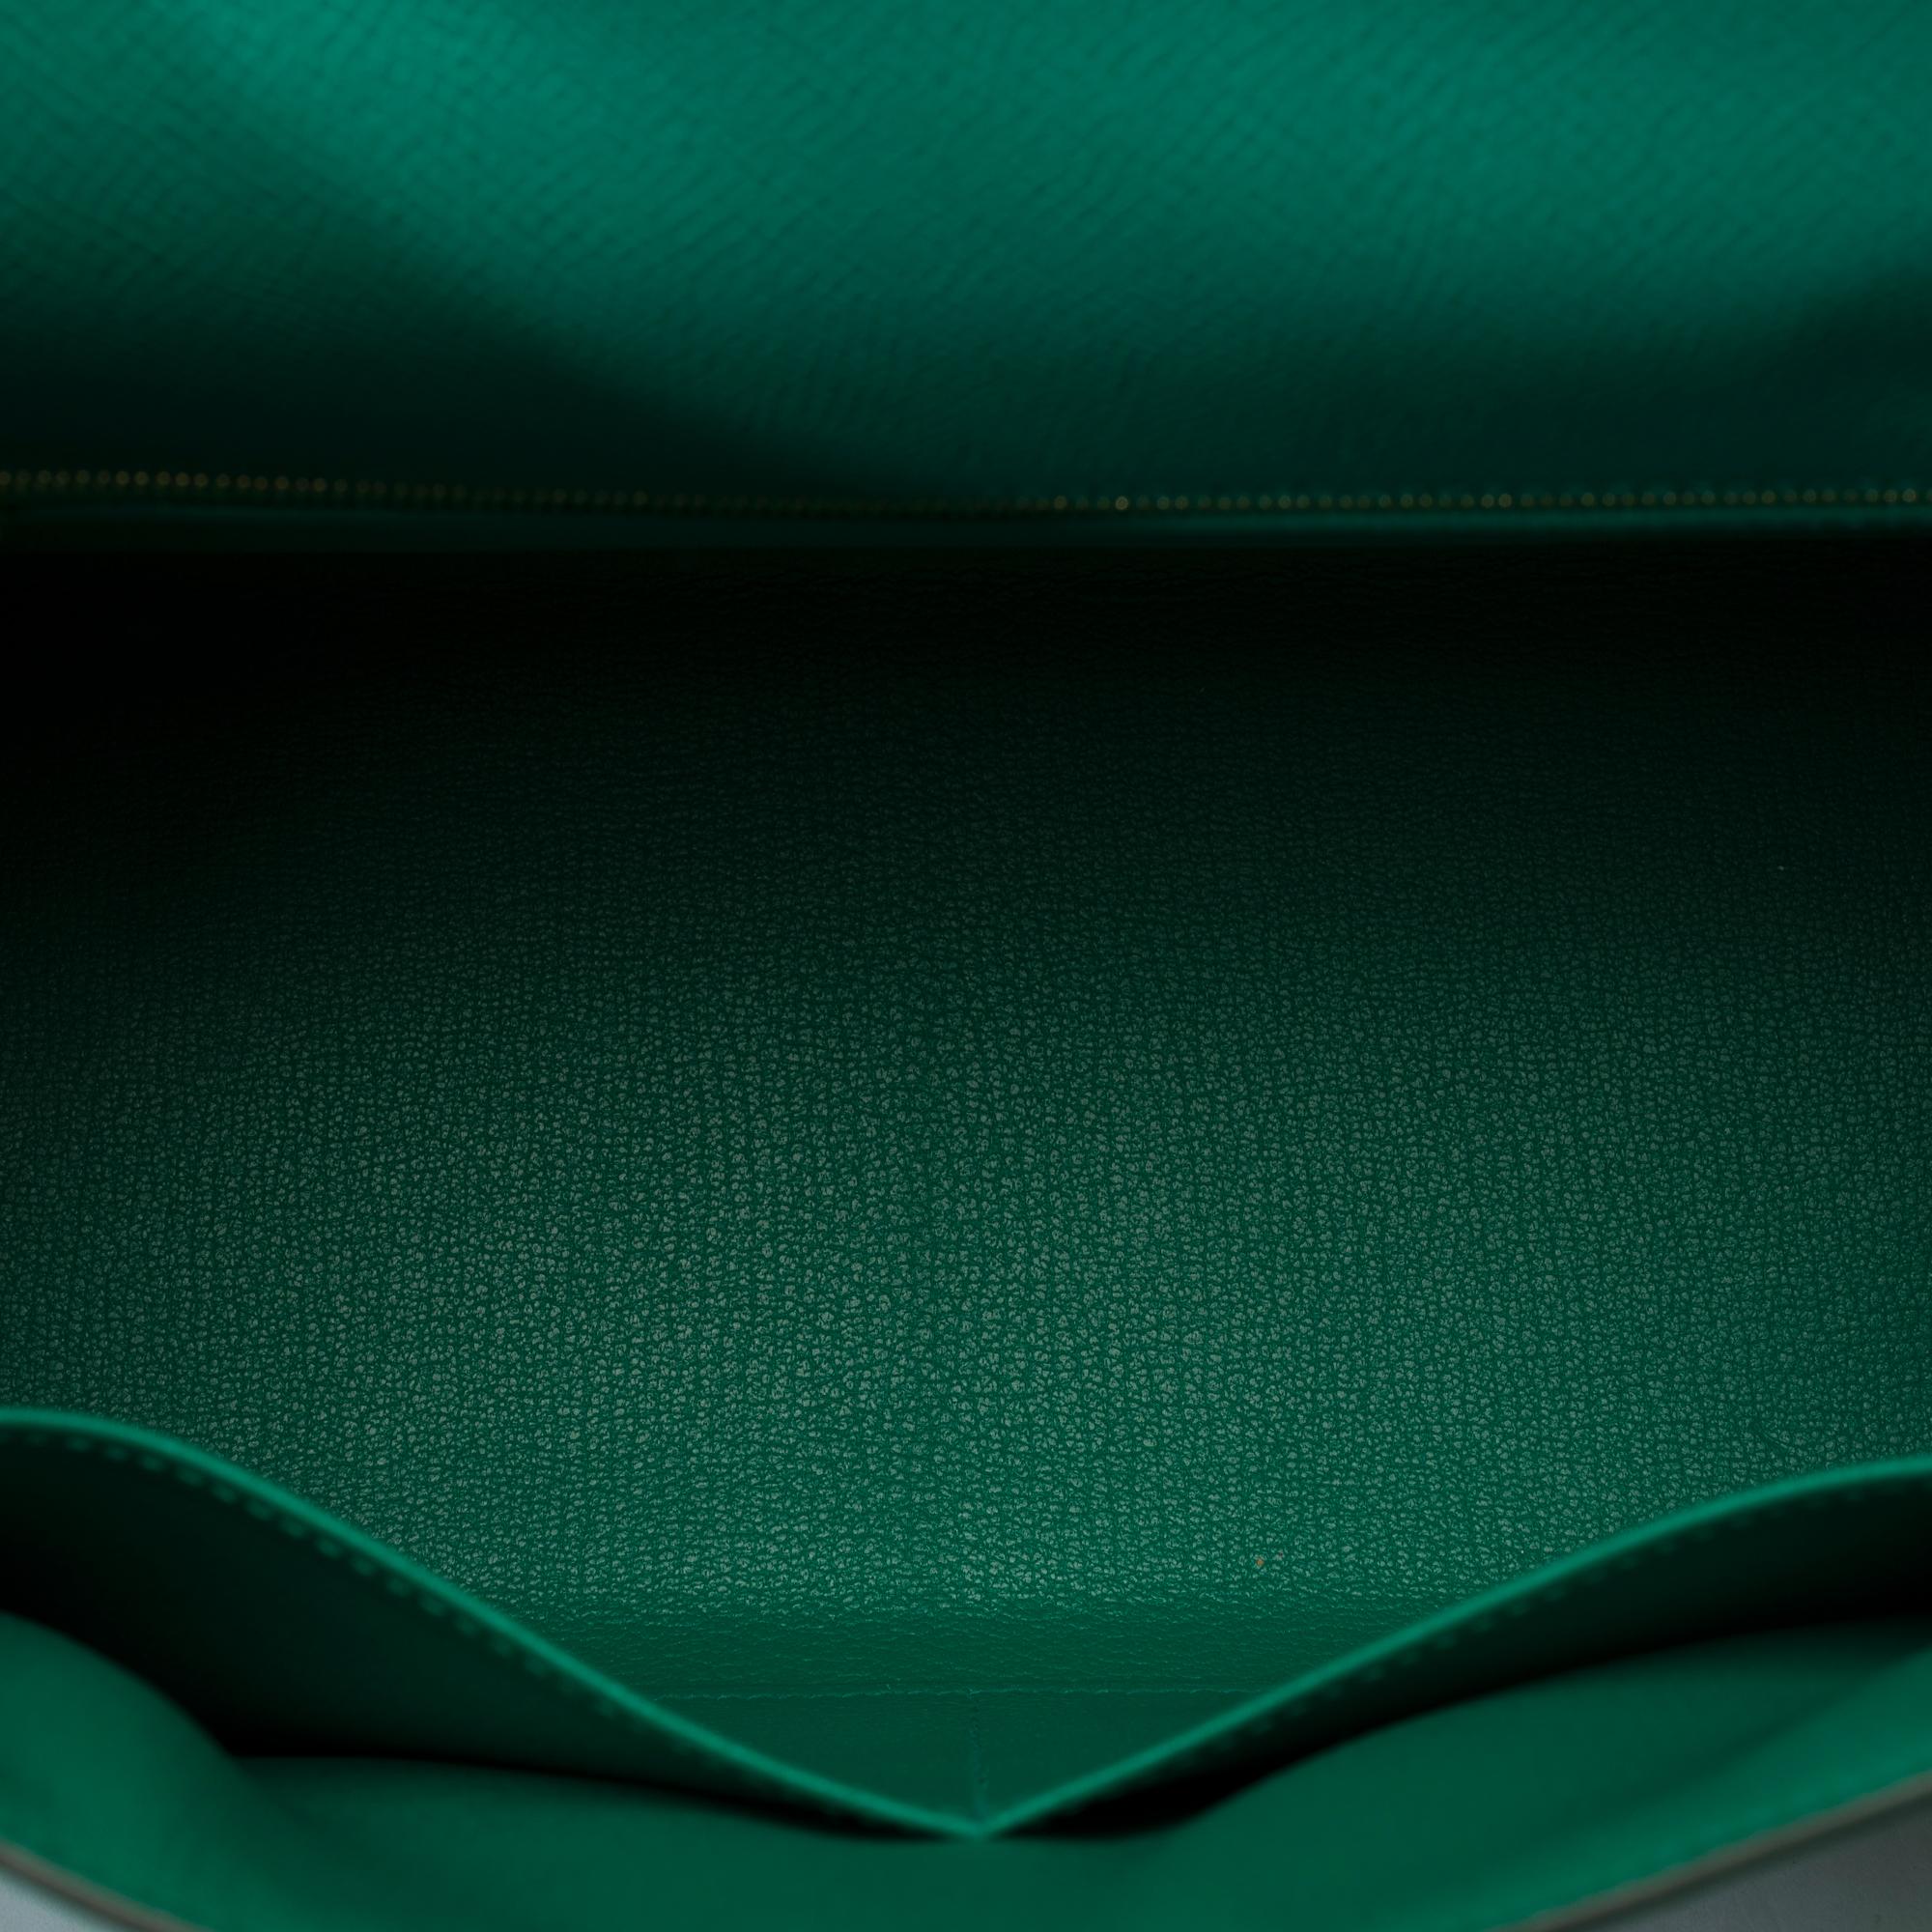 New Hermès Kelly 28 sellier handbag strap in Vert Jade Epsom leather, GHW For Sale 5